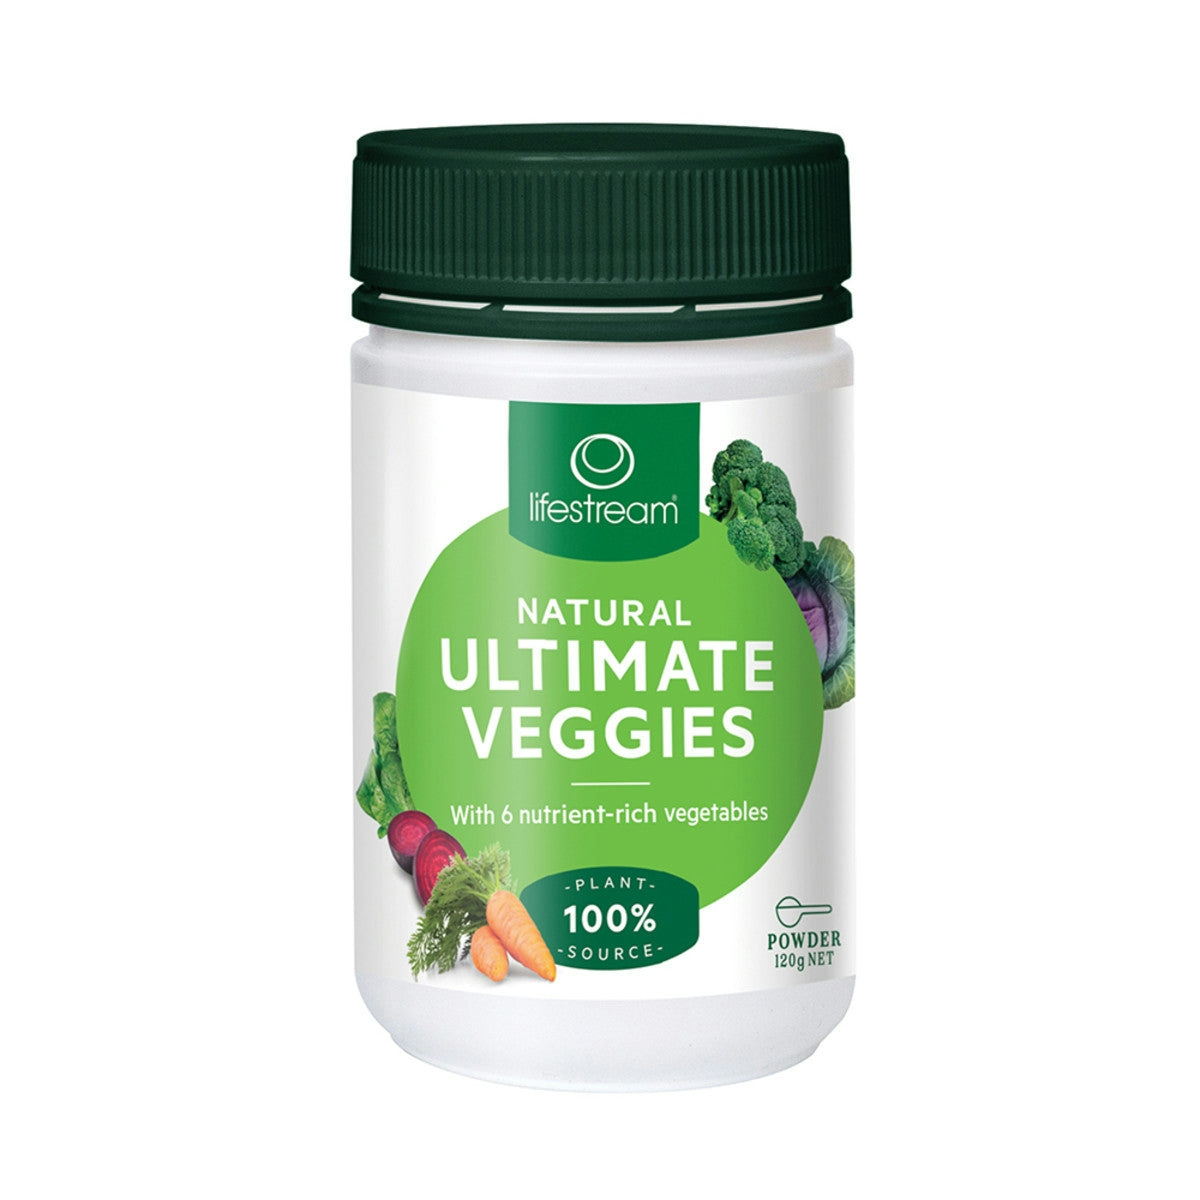 image of LifeStream Natural Ultimate Veggies 120g on white background 